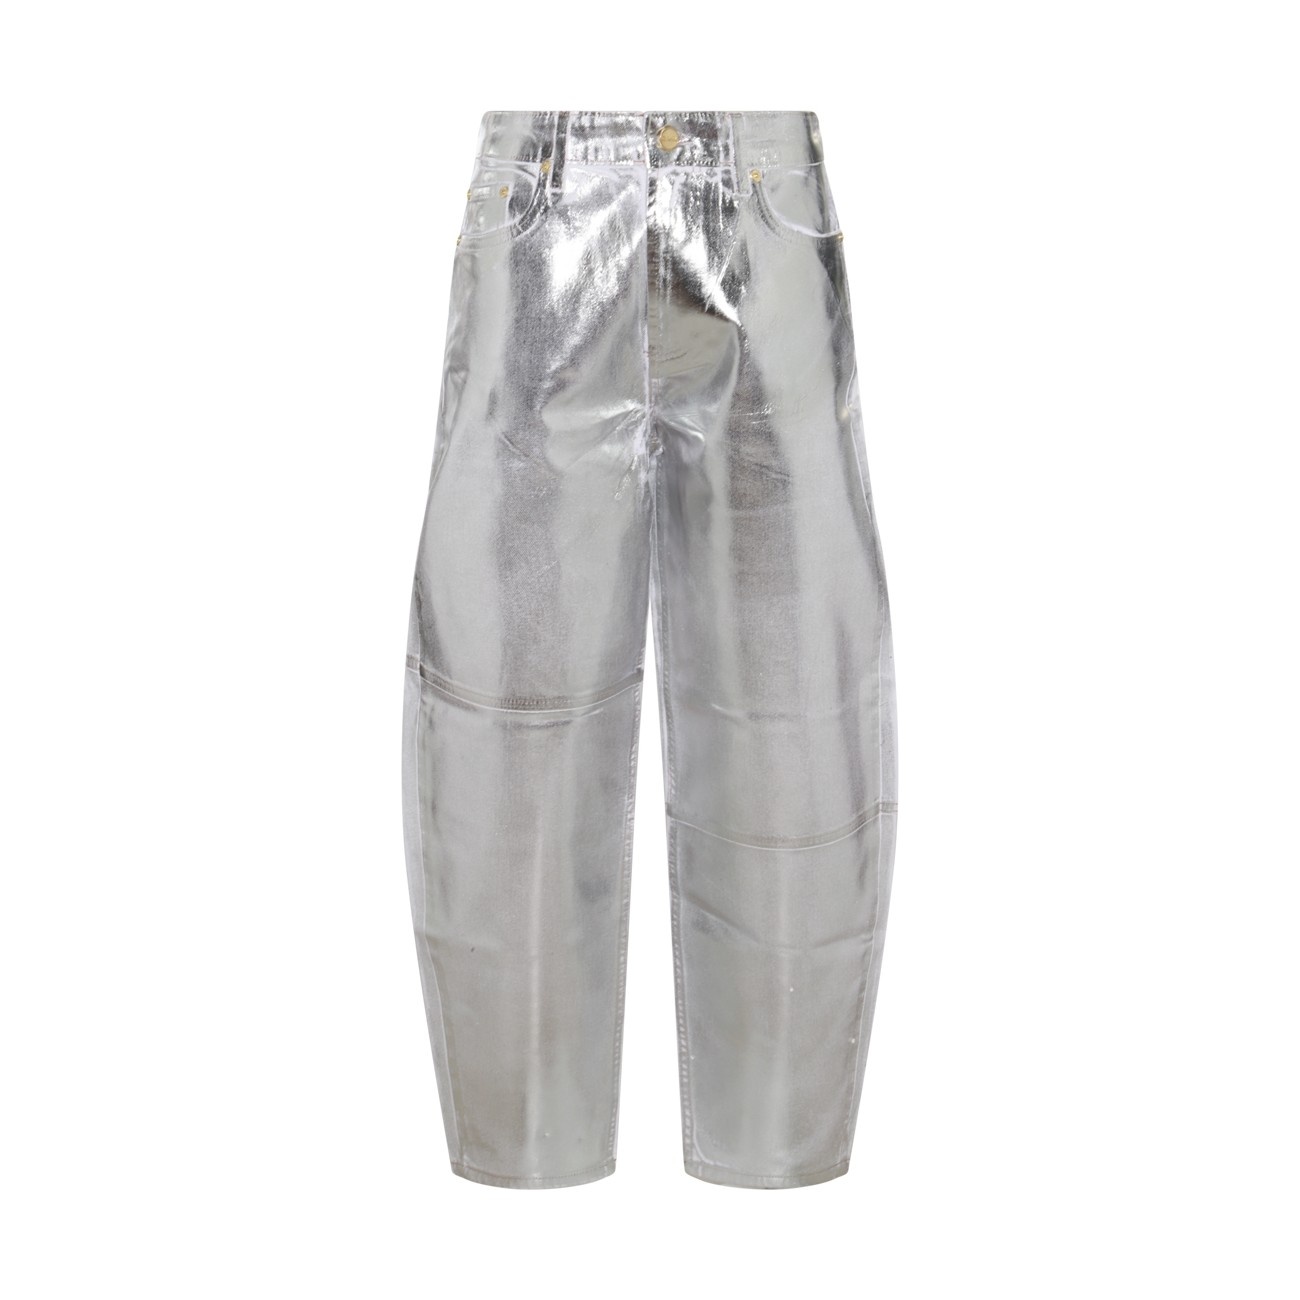 silver cotton jeans - 1